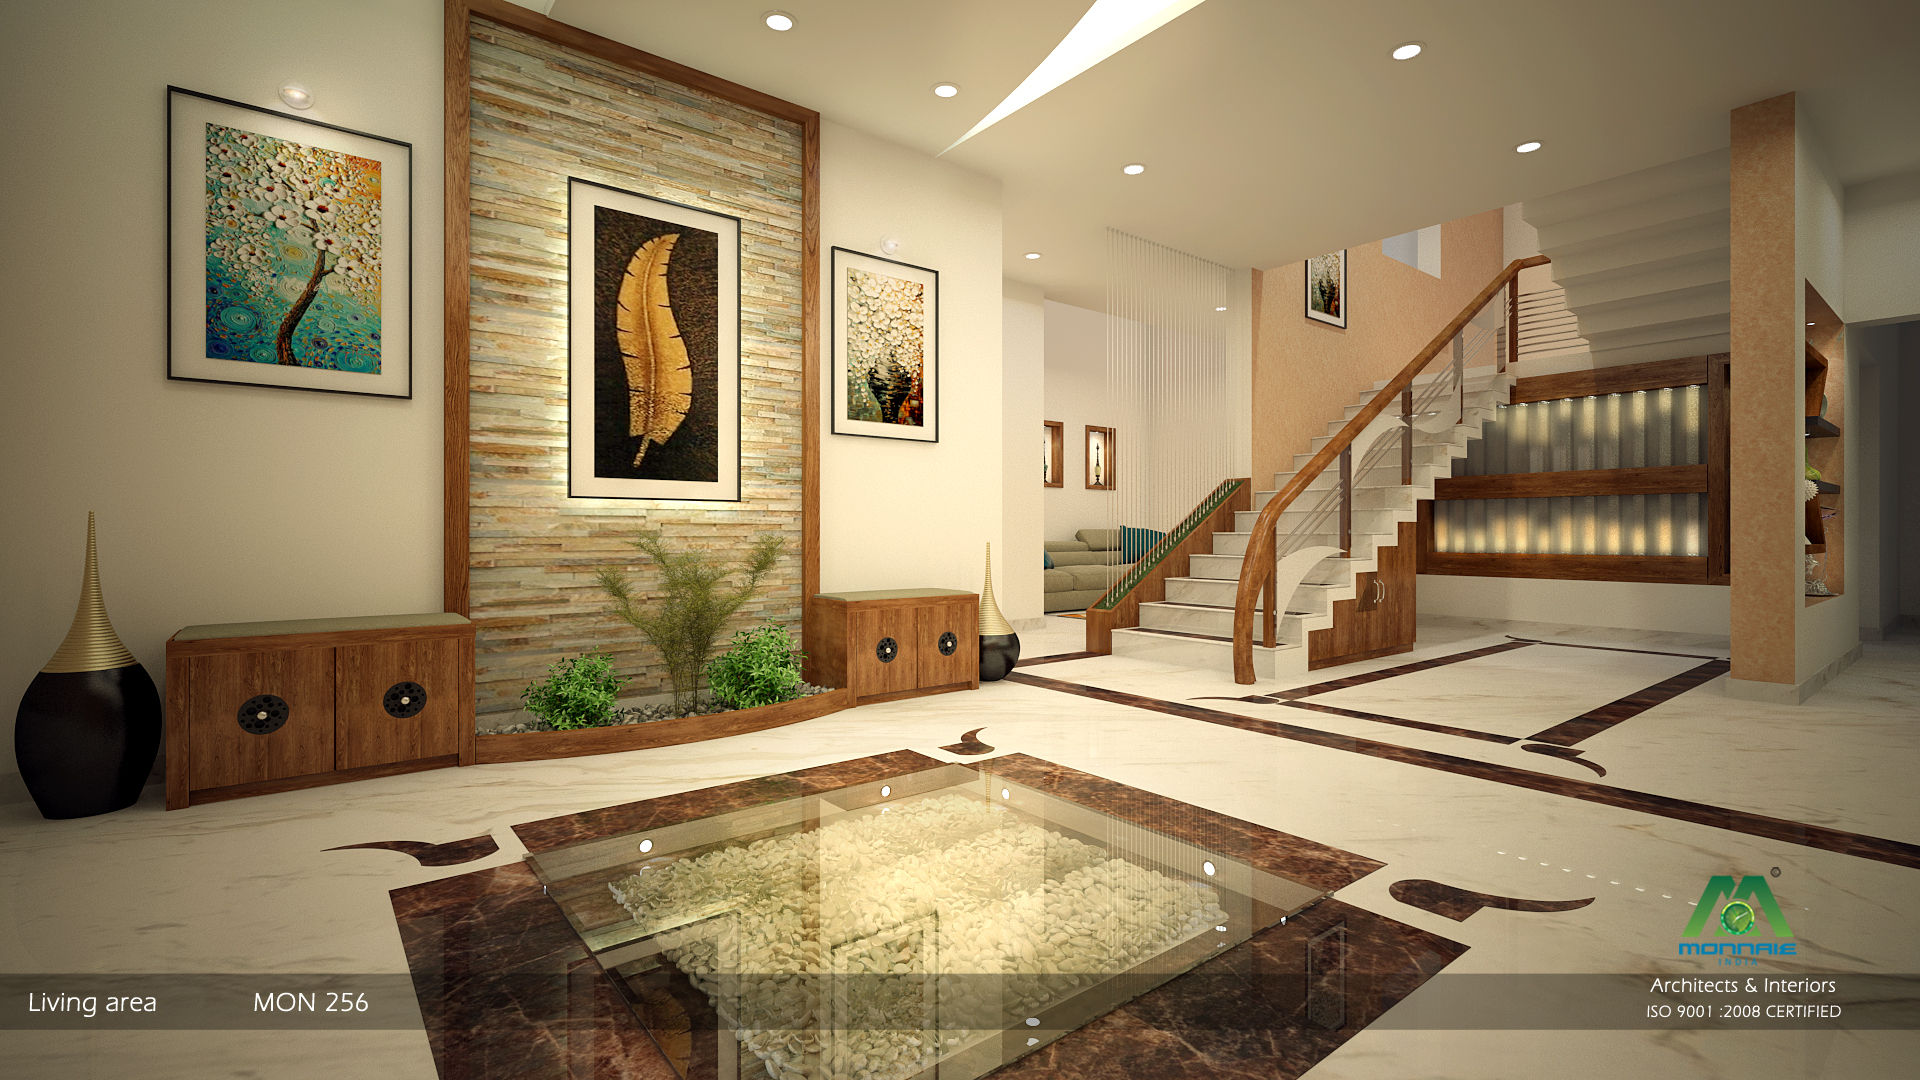 Awesome Attire, Premdas Krishna Premdas Krishna Classic style living room Picture frame,Property,Hall,Lighting,Wood,Interior design,Flooring,Architecture,Floor,Houseplant